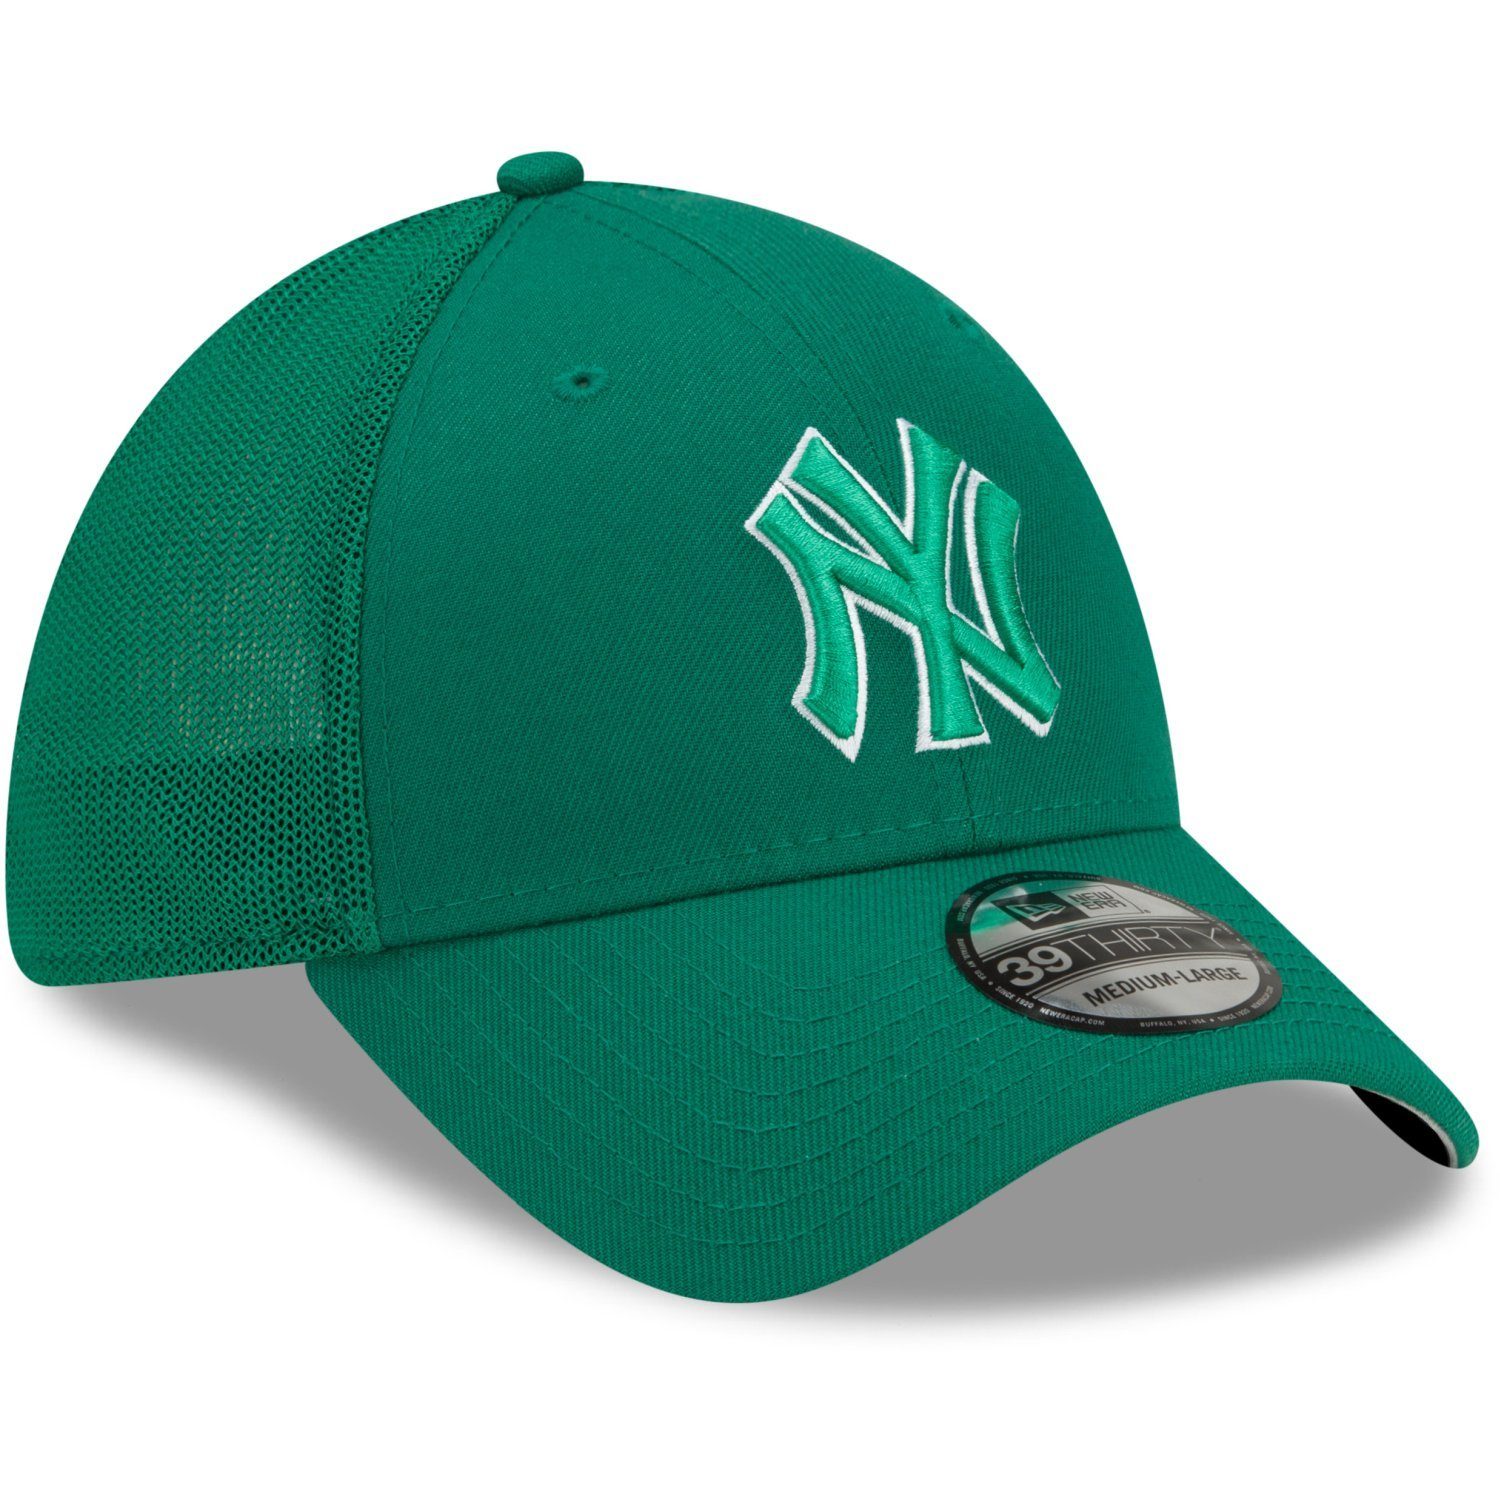 Herren Caps New Era Flex Cap 39Thirty ST. PATRICK’S DAY New York Yankees